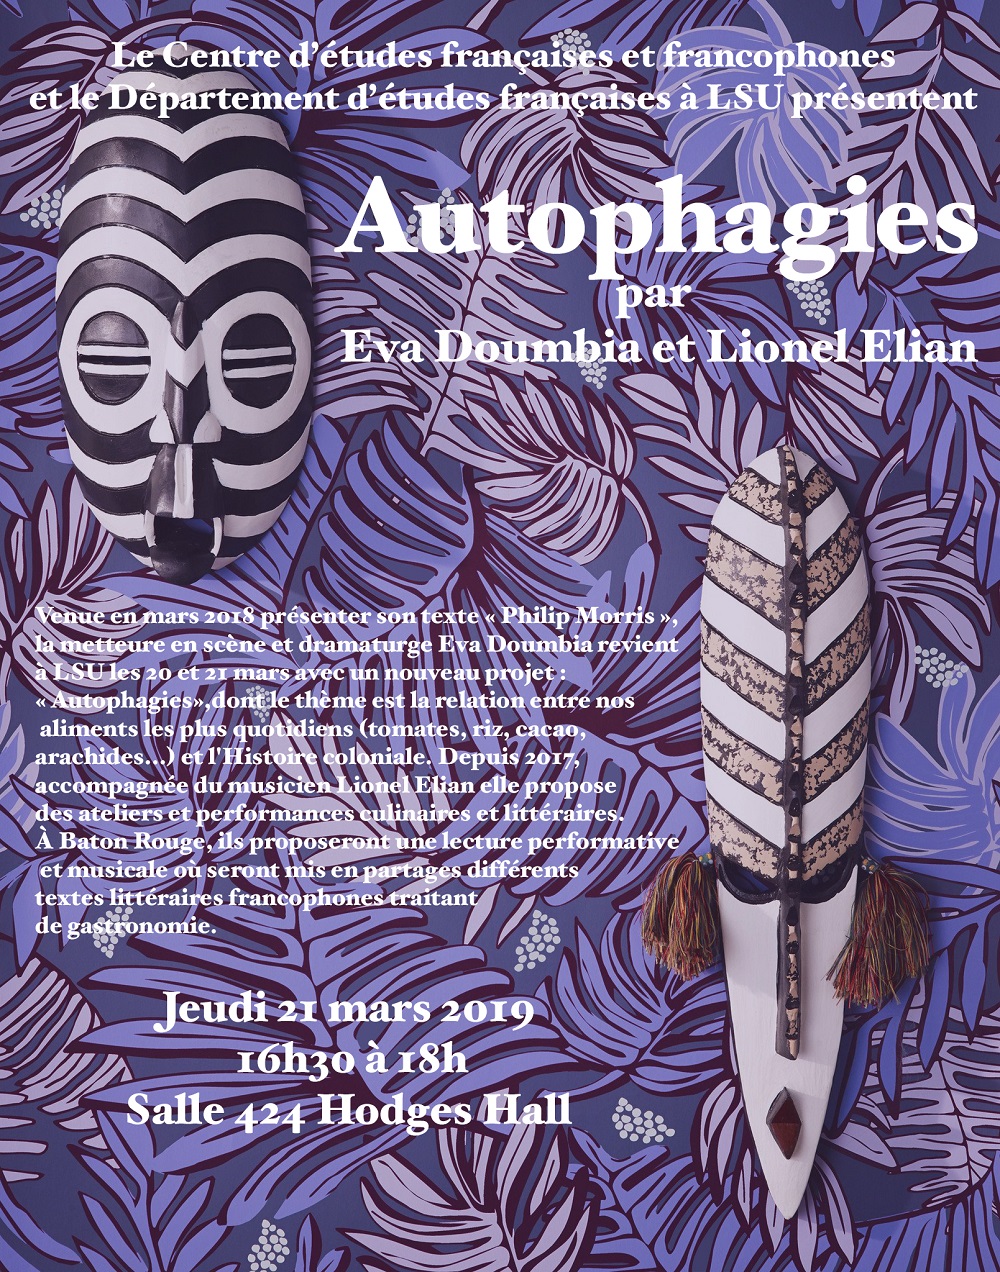 Autophagies event poster